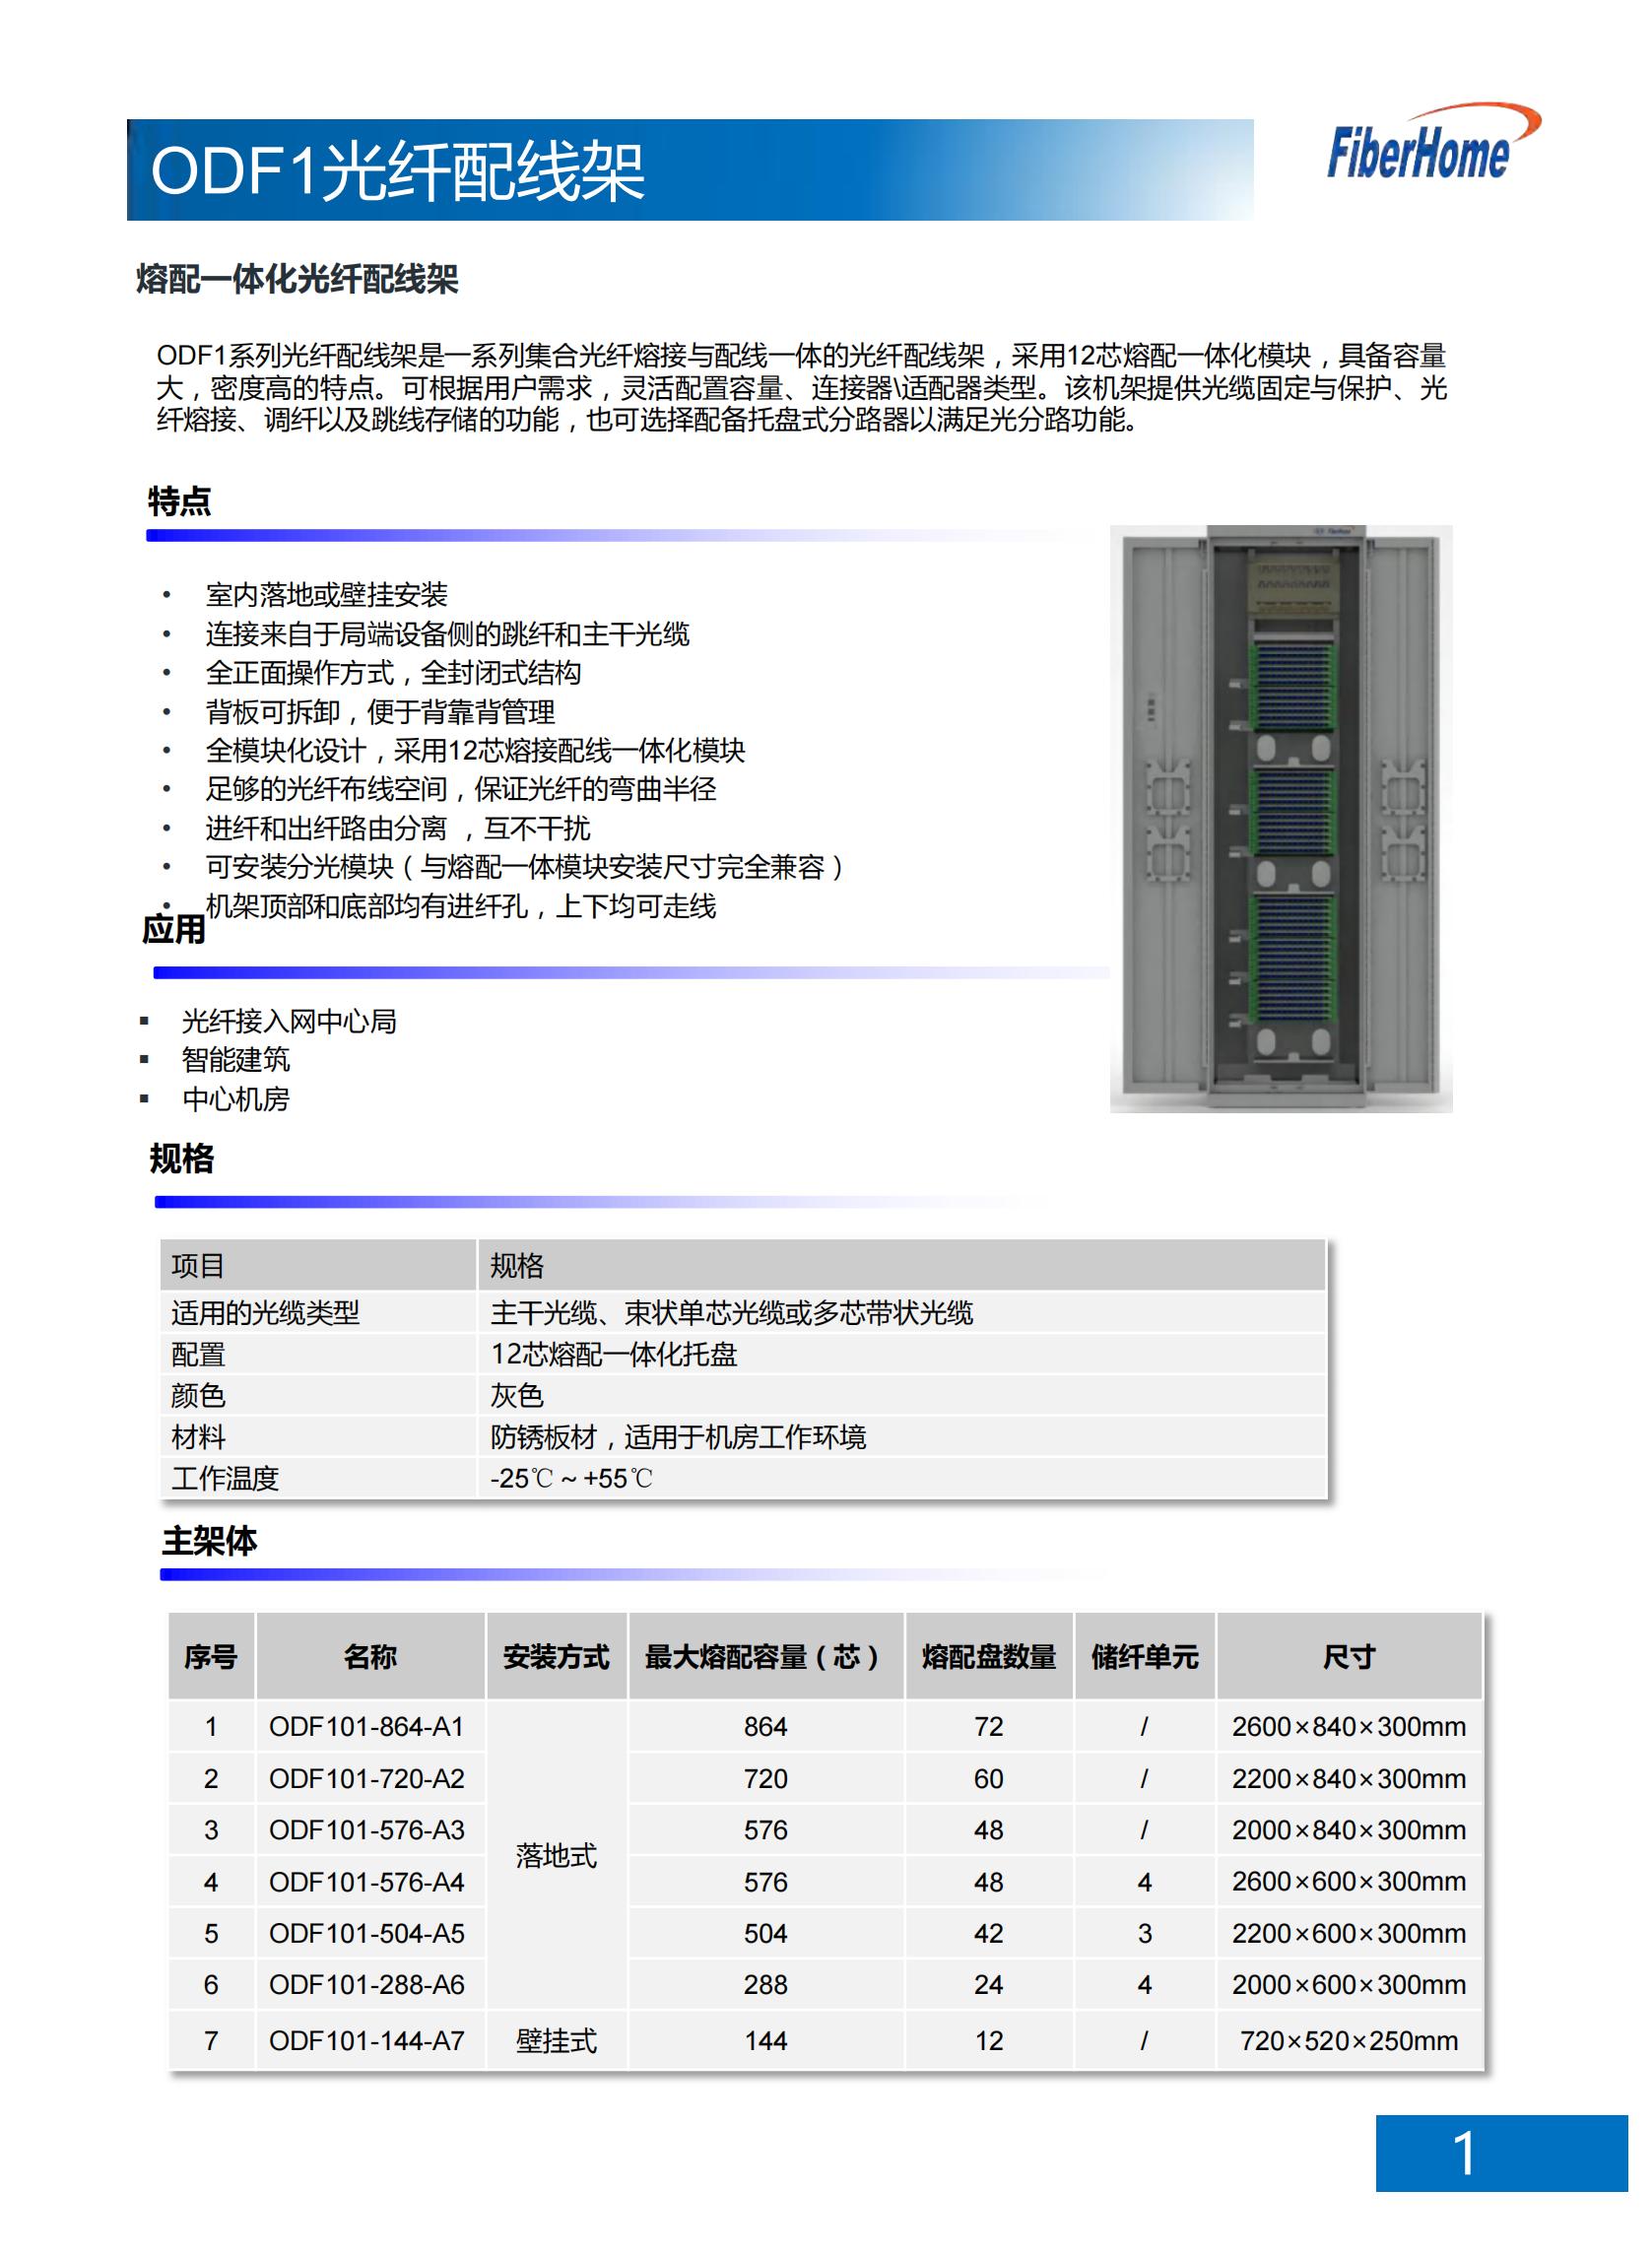 ODF101-504-A5-SC ODF光纤配线架 （504芯落地式 全部含12芯SC熔配一体化单元）